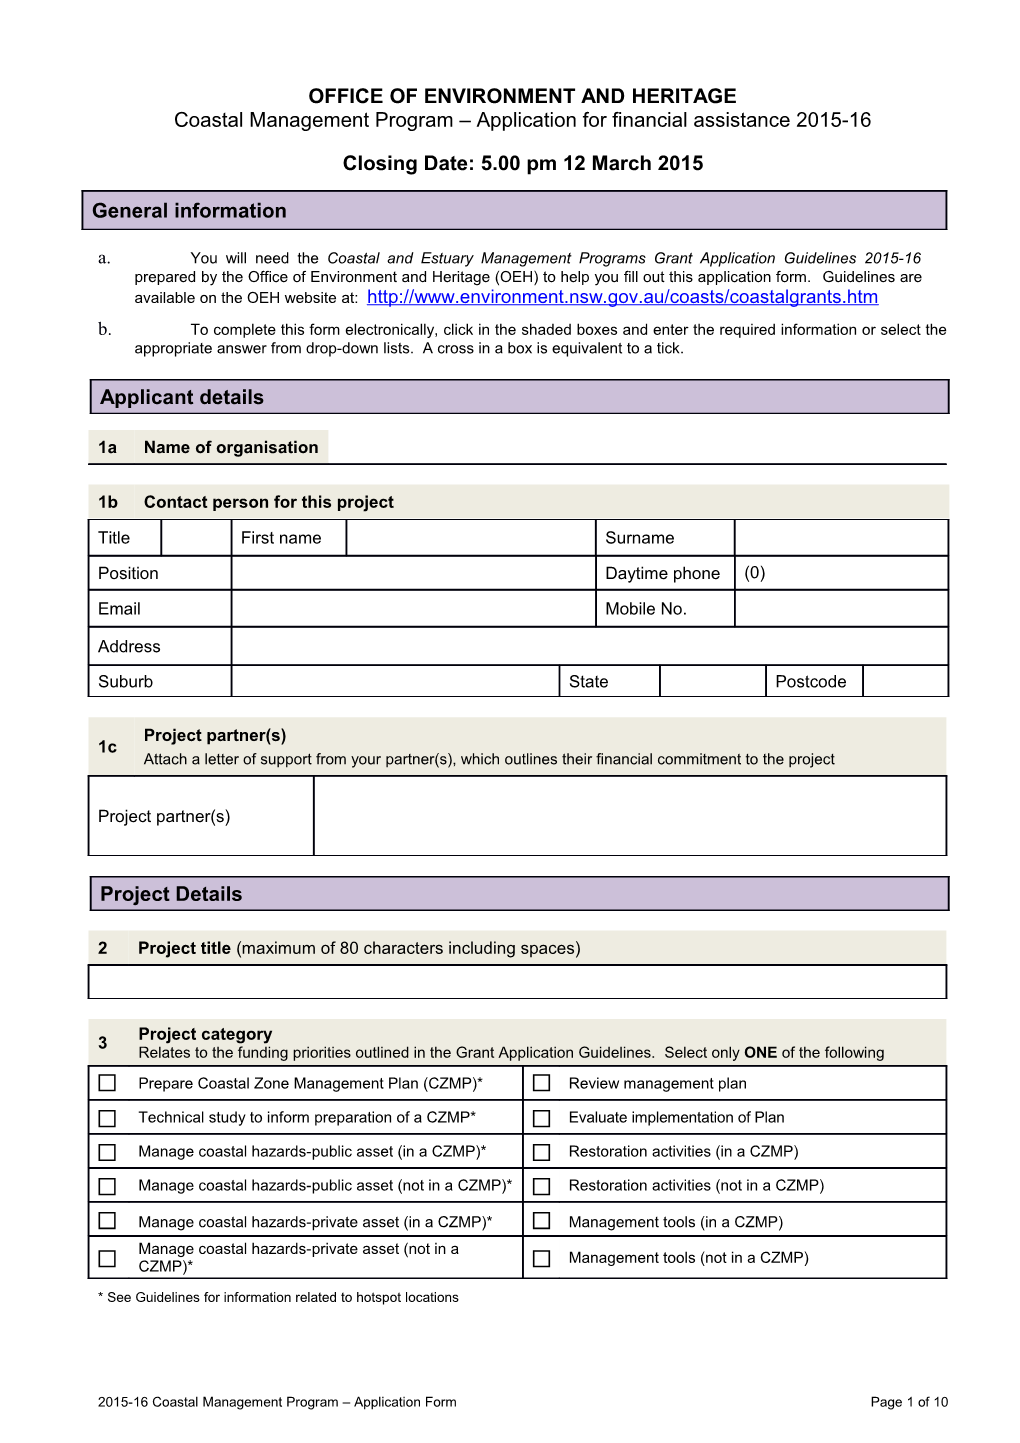 2014-15 Coastal Management Program Application Form